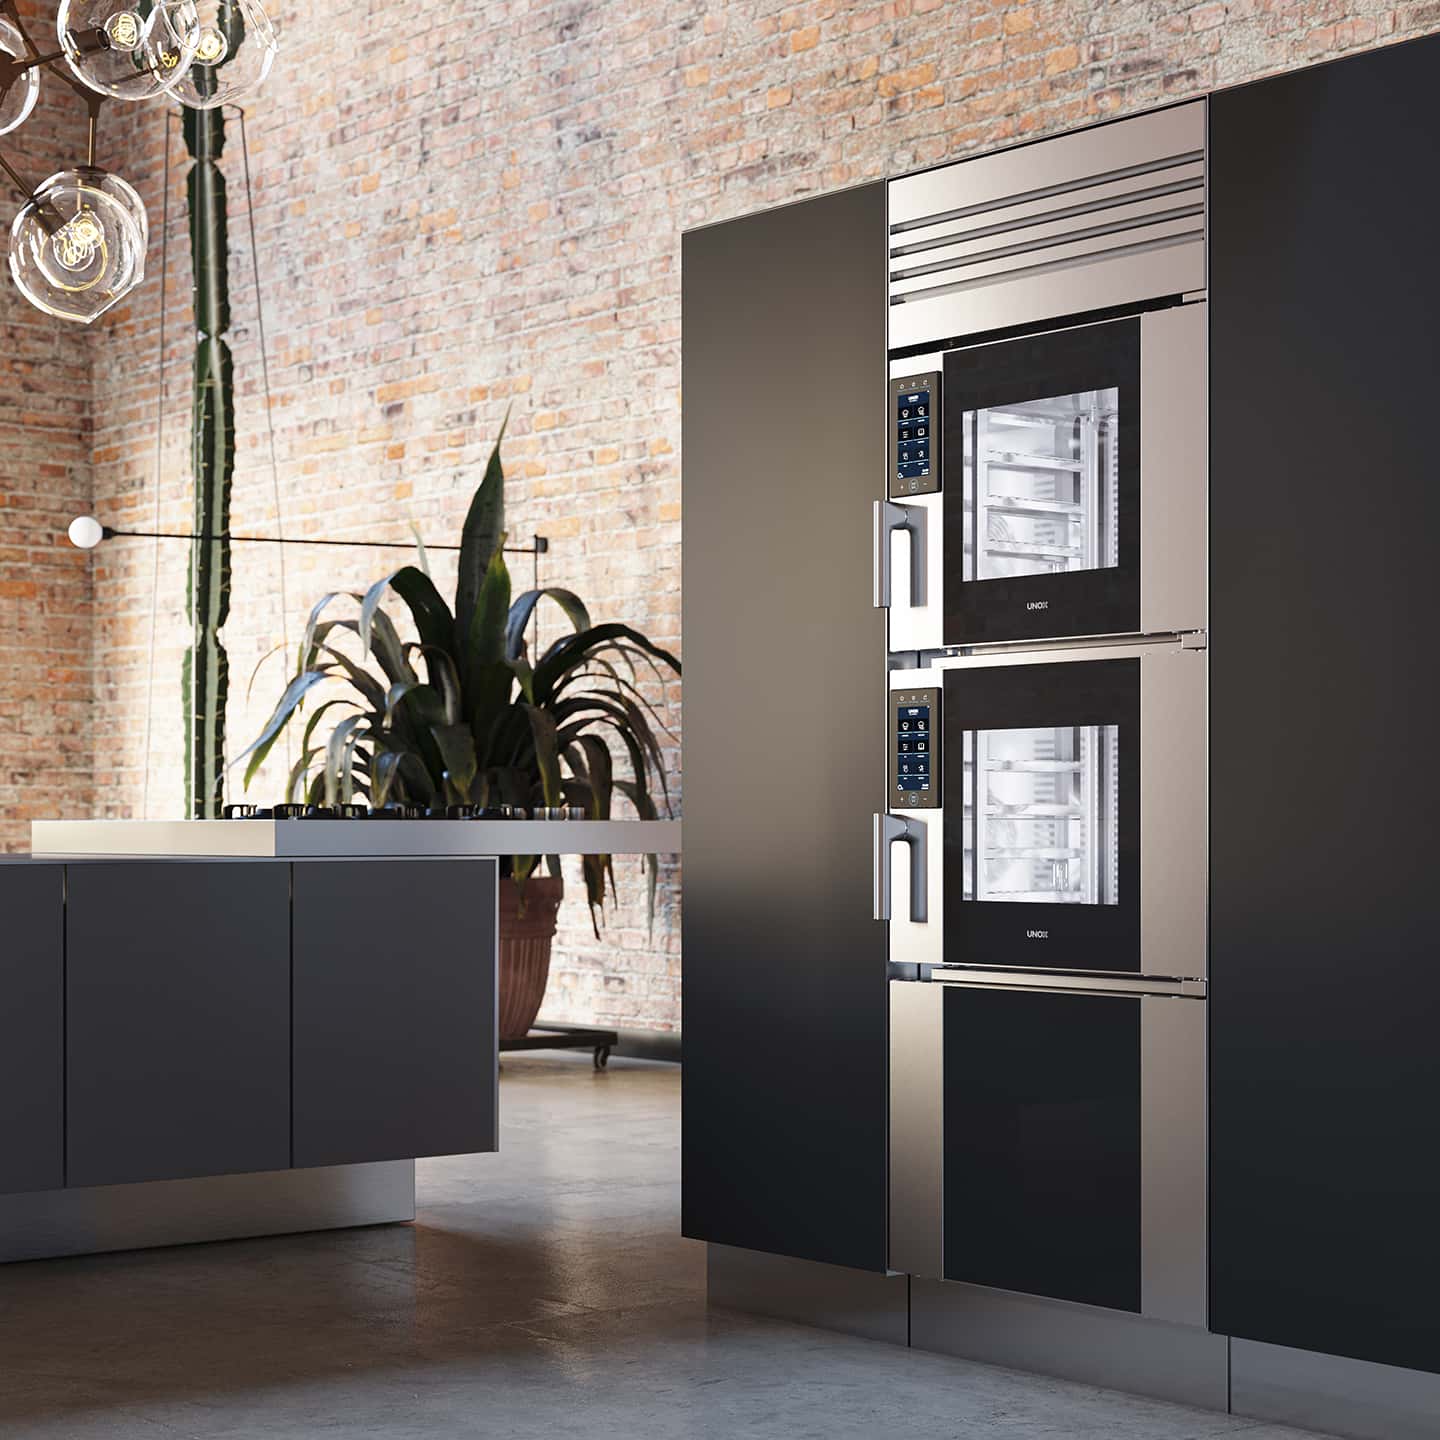 Luxury built-in oven Model 1 by Unox Casa in a design kitchen in Amsterdam